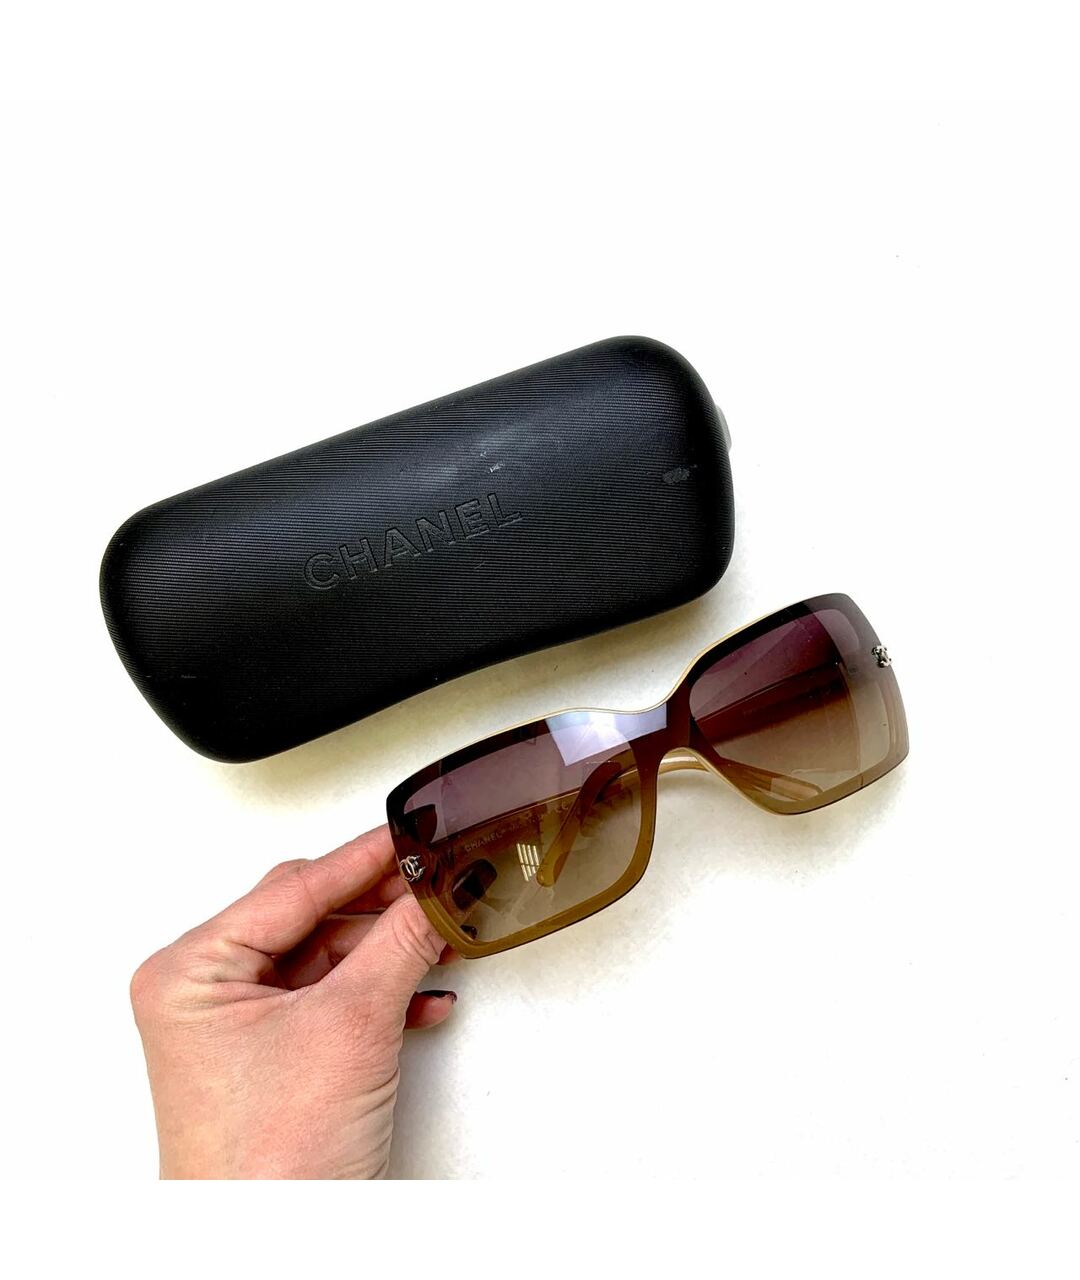 CHANEL PRE-OWNED Солнцезащитные очки, фото 3